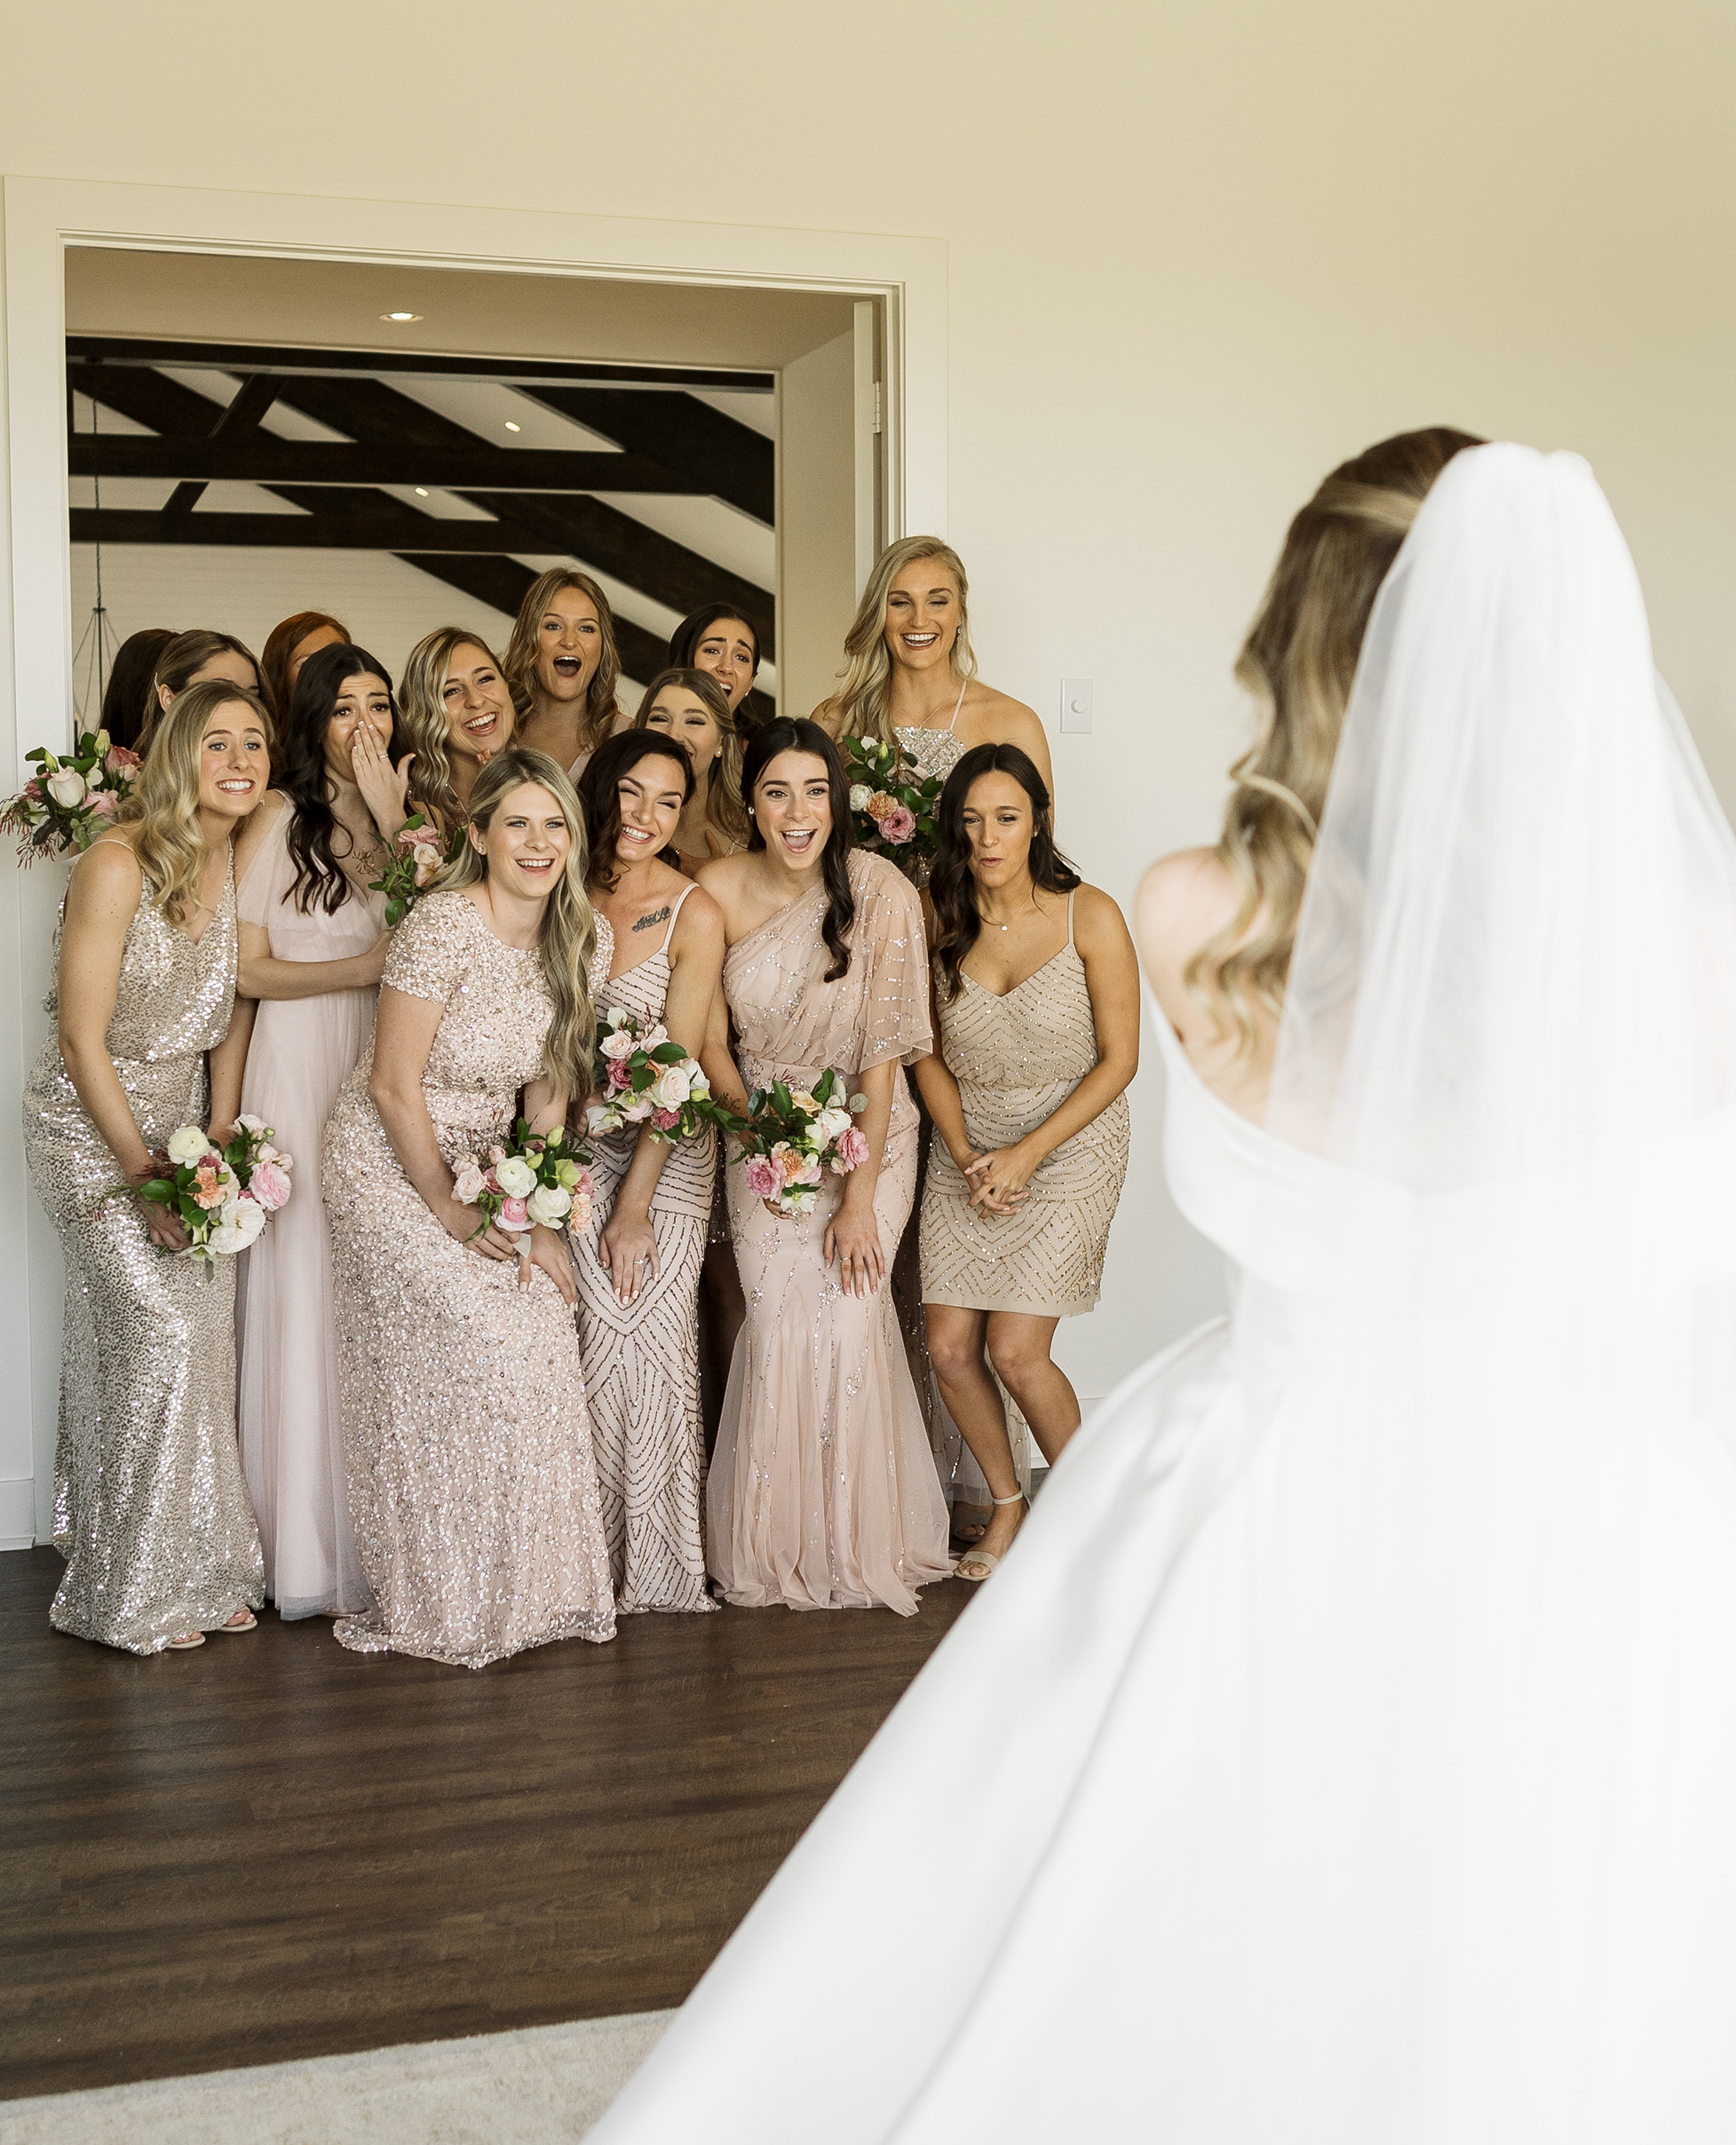 The bride reveals her final look to her bridesmaids.